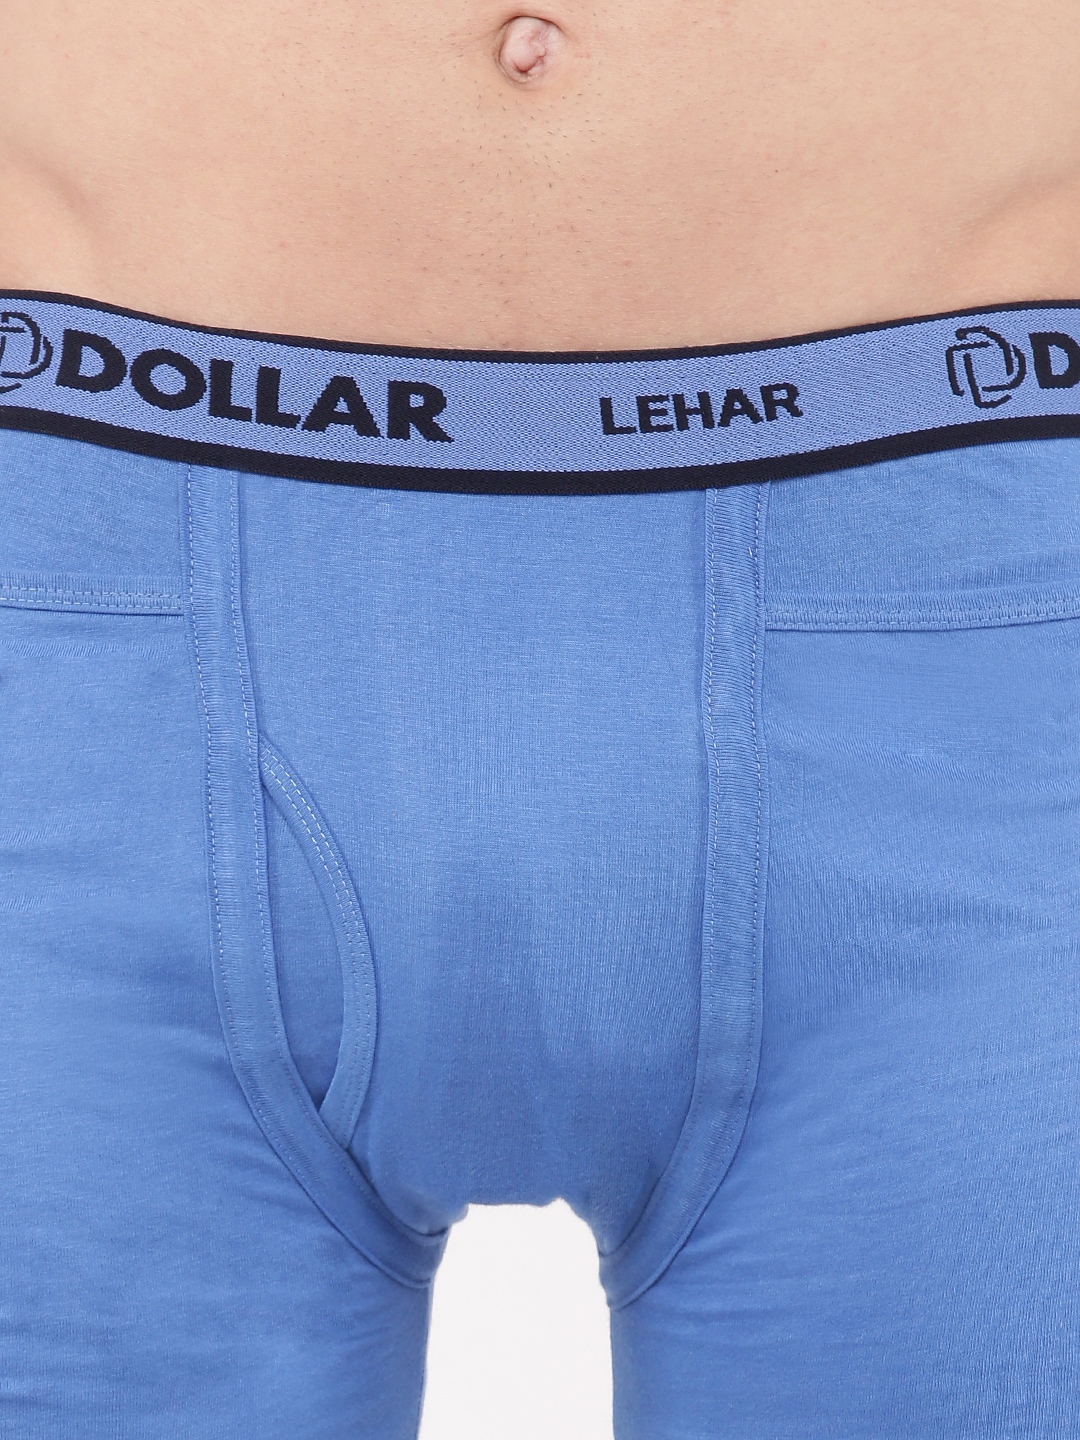 Dollar Lehar Mens Pack of 3 Fine Pocket Trunk